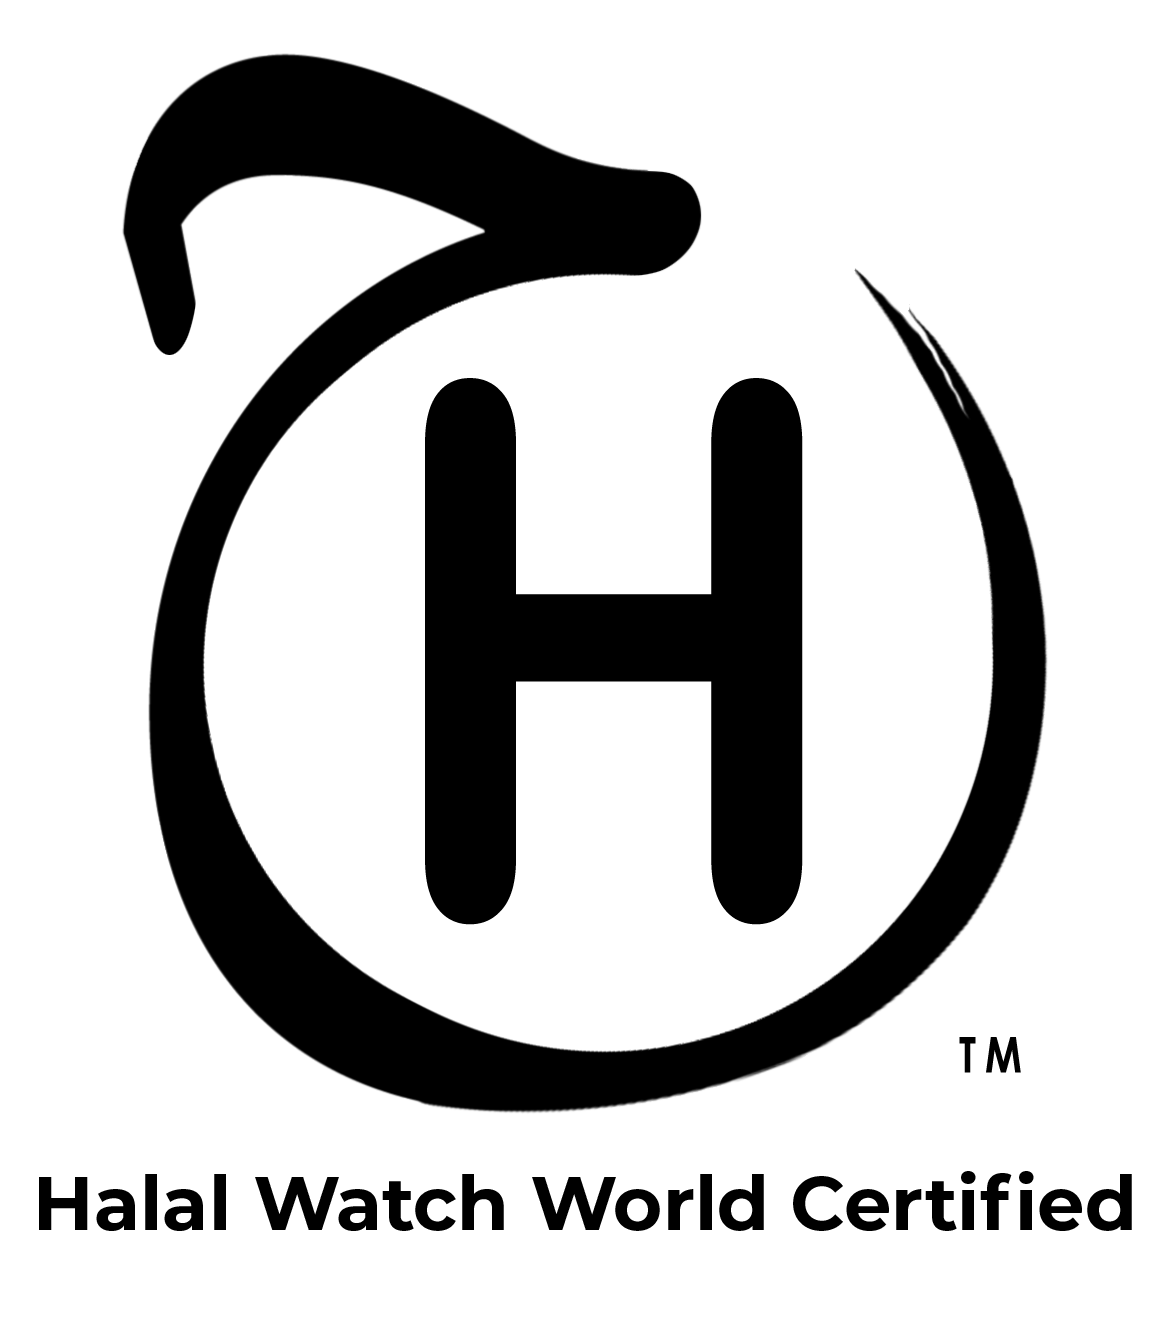 (c) Halalwatchworld.org